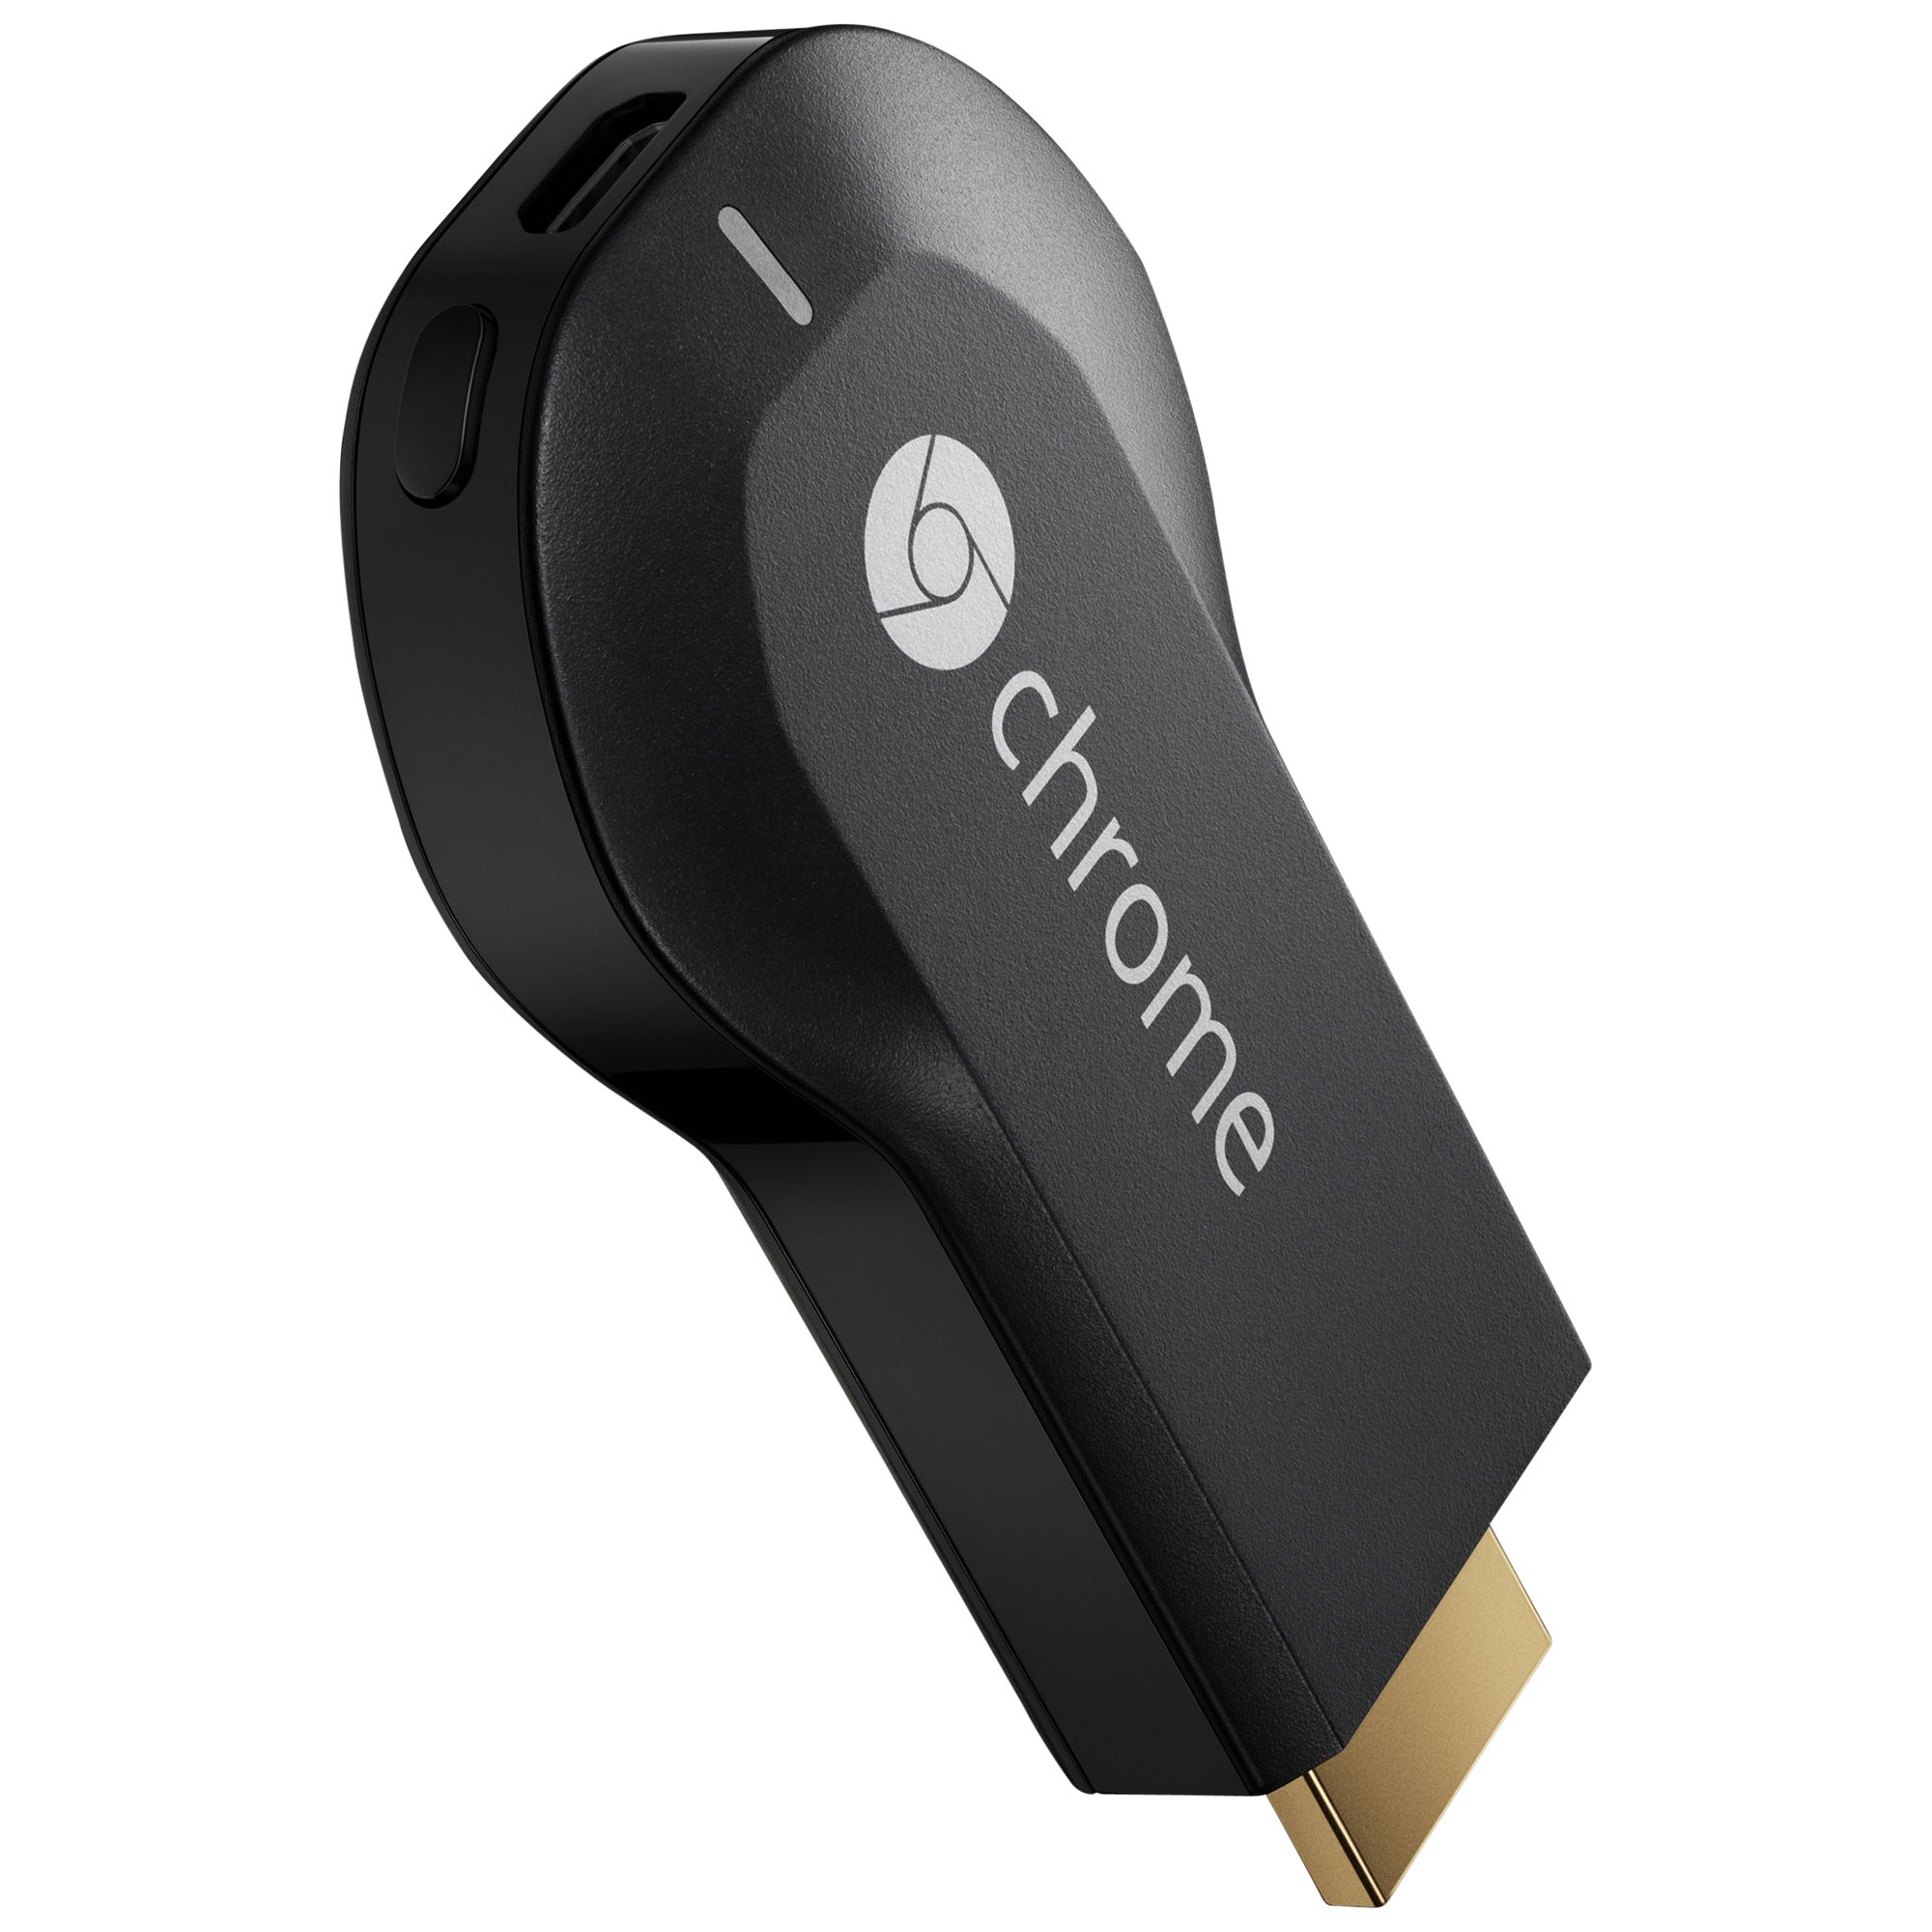 Google Chromecast, HDMI Media Device